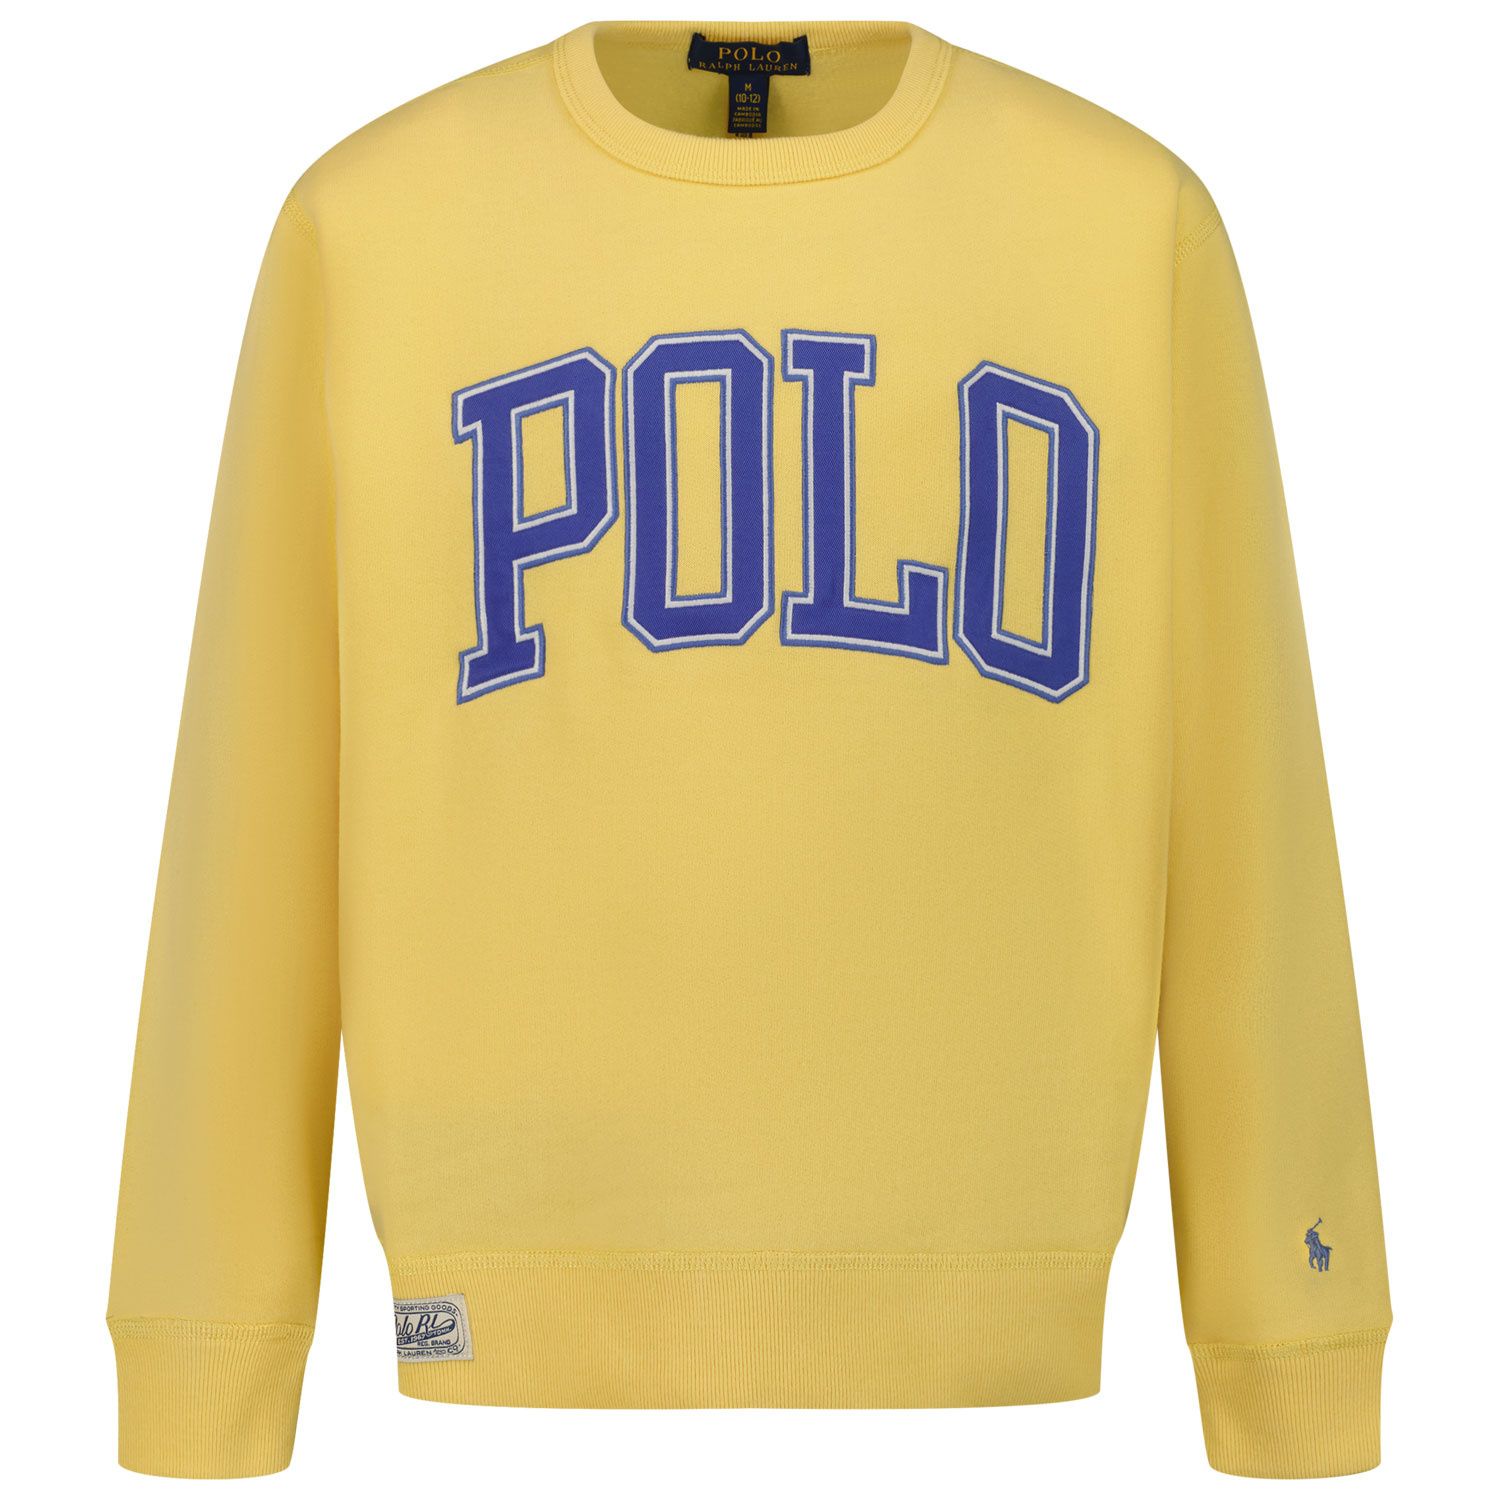 Picture of Ralph Lauren 851011 kids sweater yellow